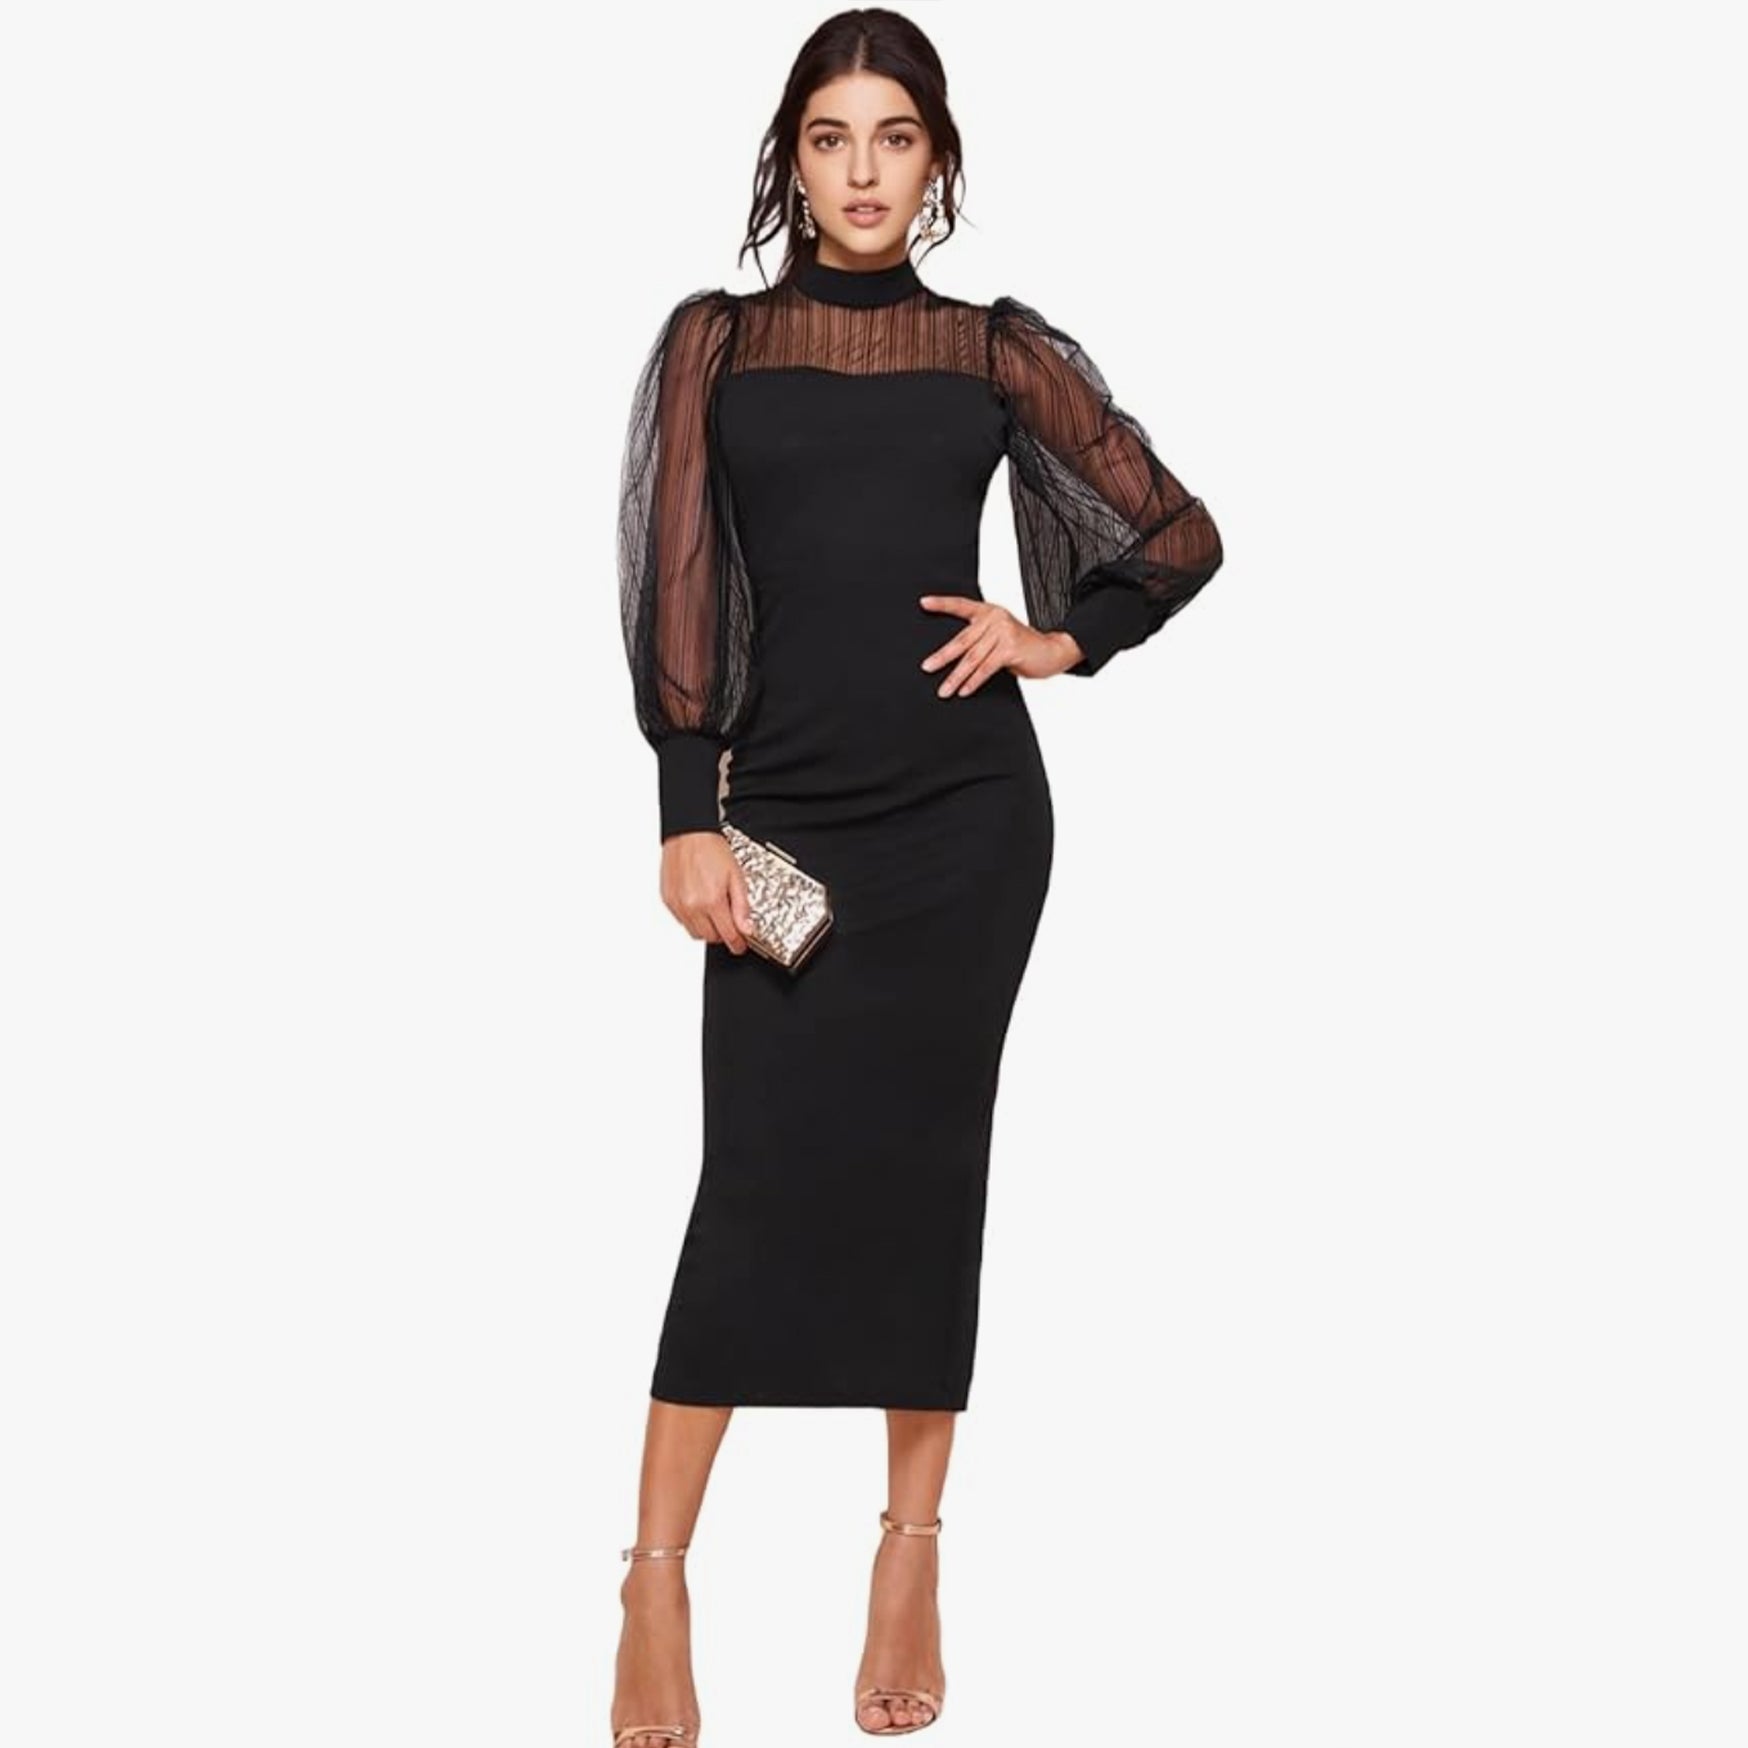 Sheetal Associates Women's Half Sleeve Sweetheart Neck Bodycon Casual Maxi Dress Black